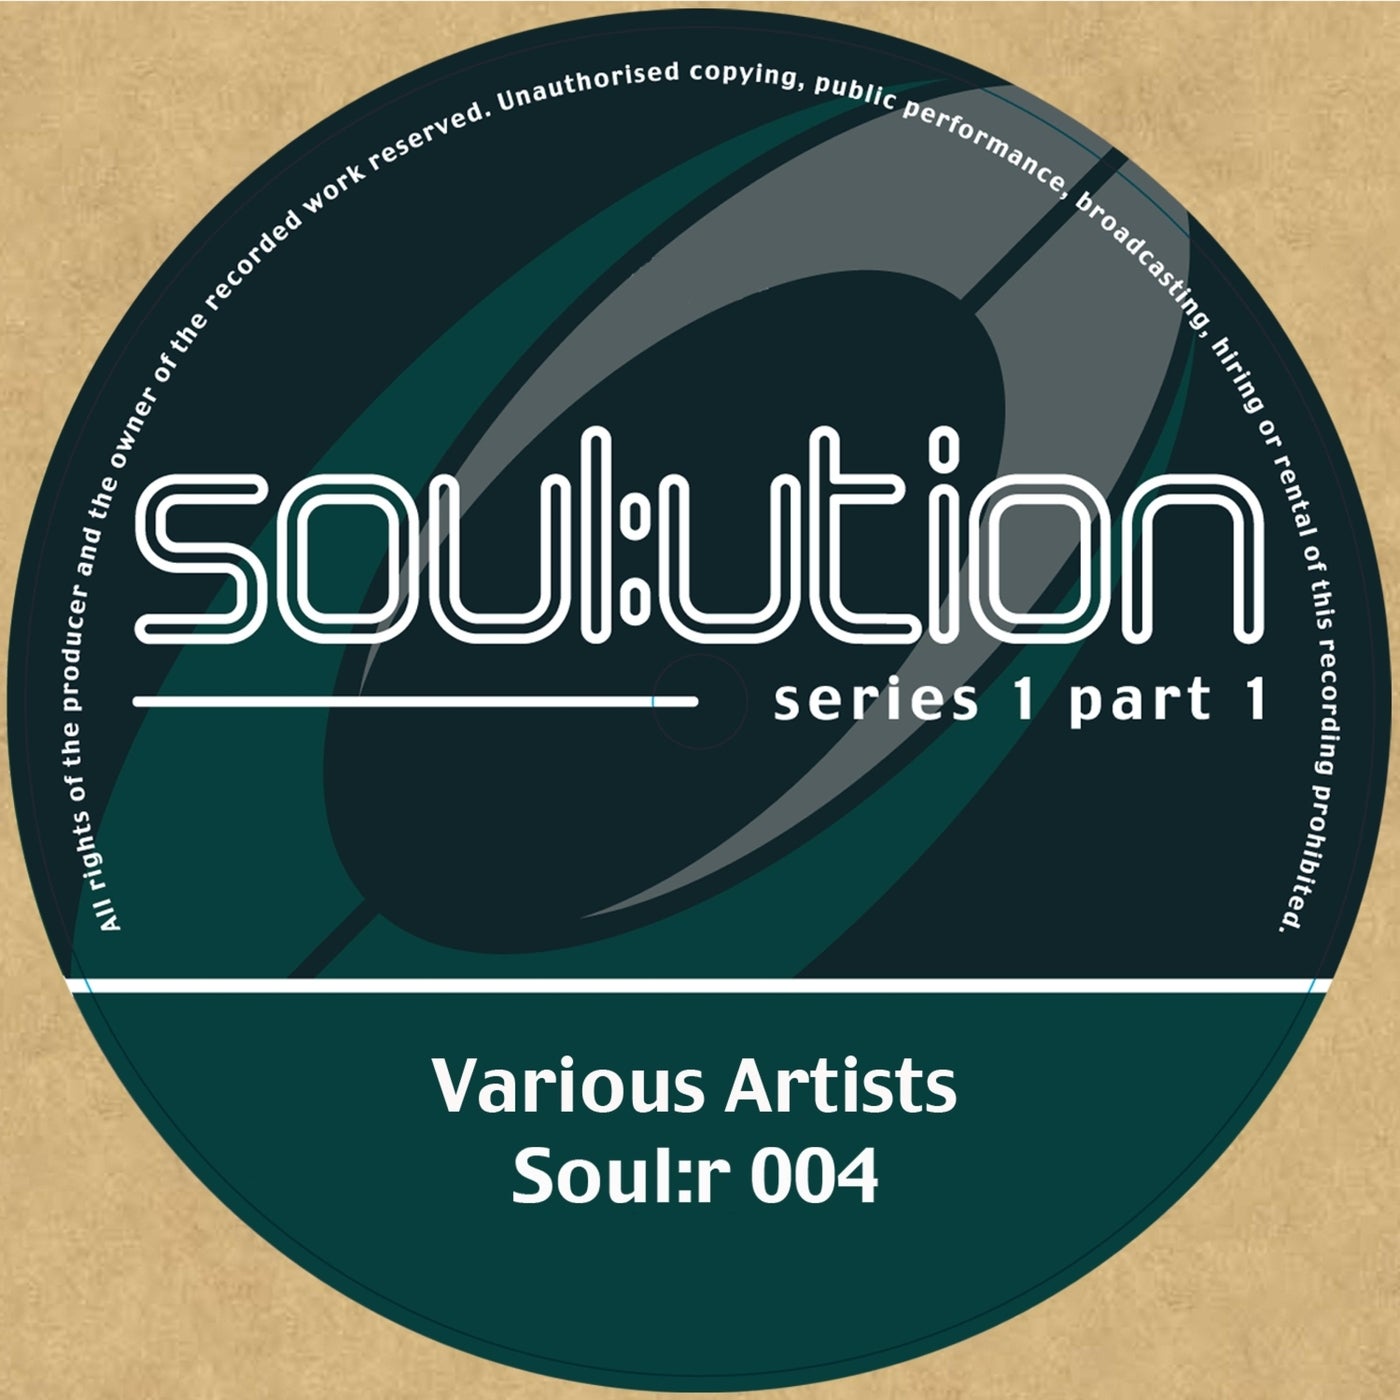 Soul:ution Series 1, Pt. 1